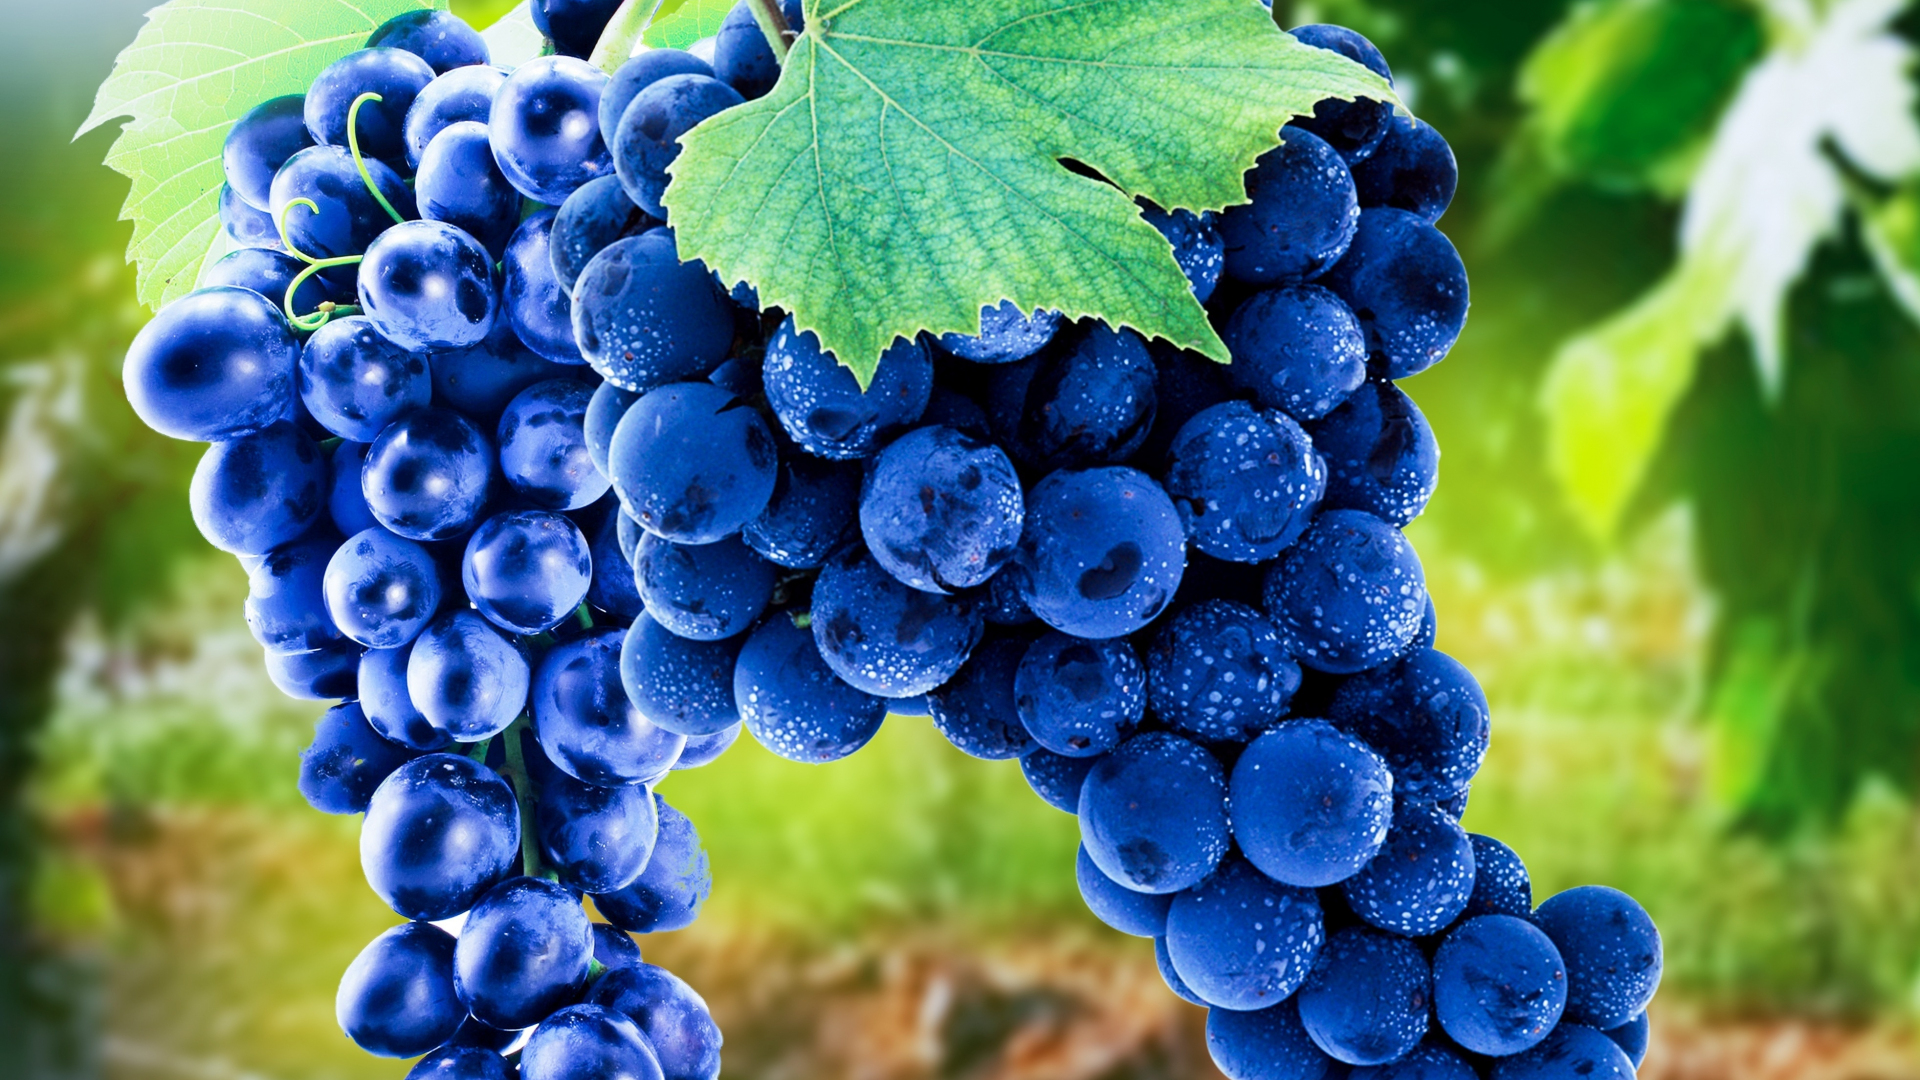 Download wallpaper 1920x1080 grapes, blue, fruits, ripen, full hd, hdtv,  fhd, 1080p wallpaper, 1920x1080 hd background, 16505